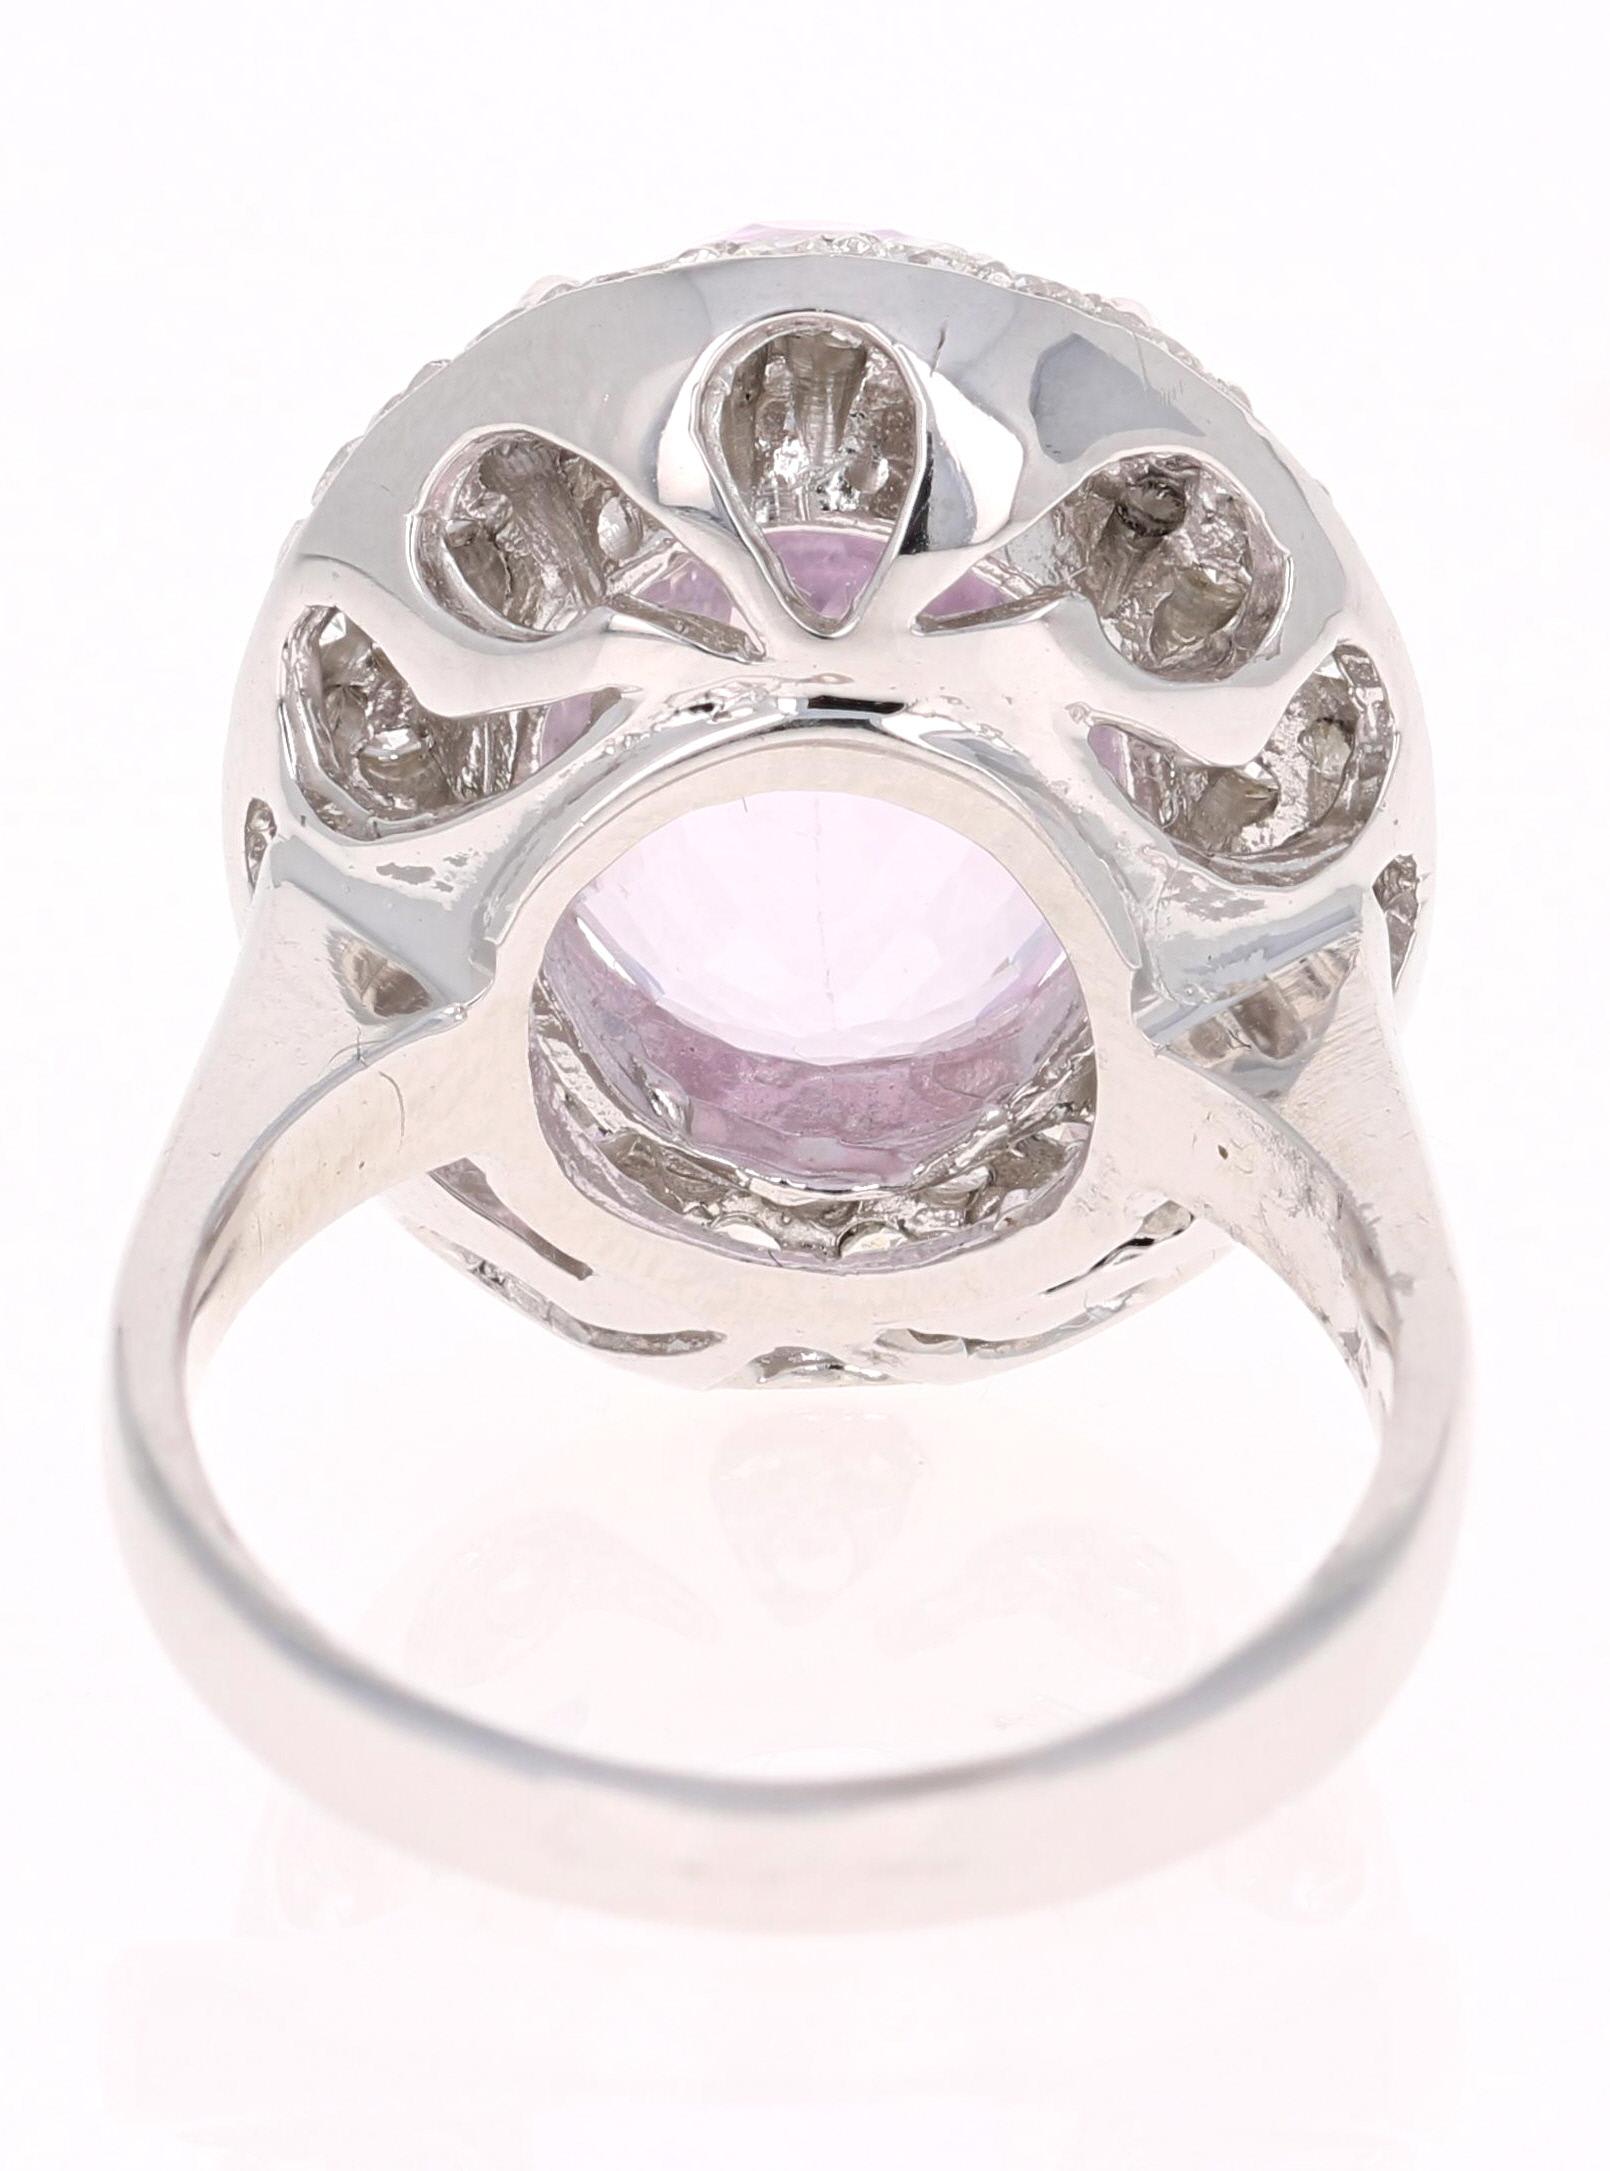 Oval Cut 11.89 Carat Kunzite Diamond 14 Karat White Gold Ring For Sale